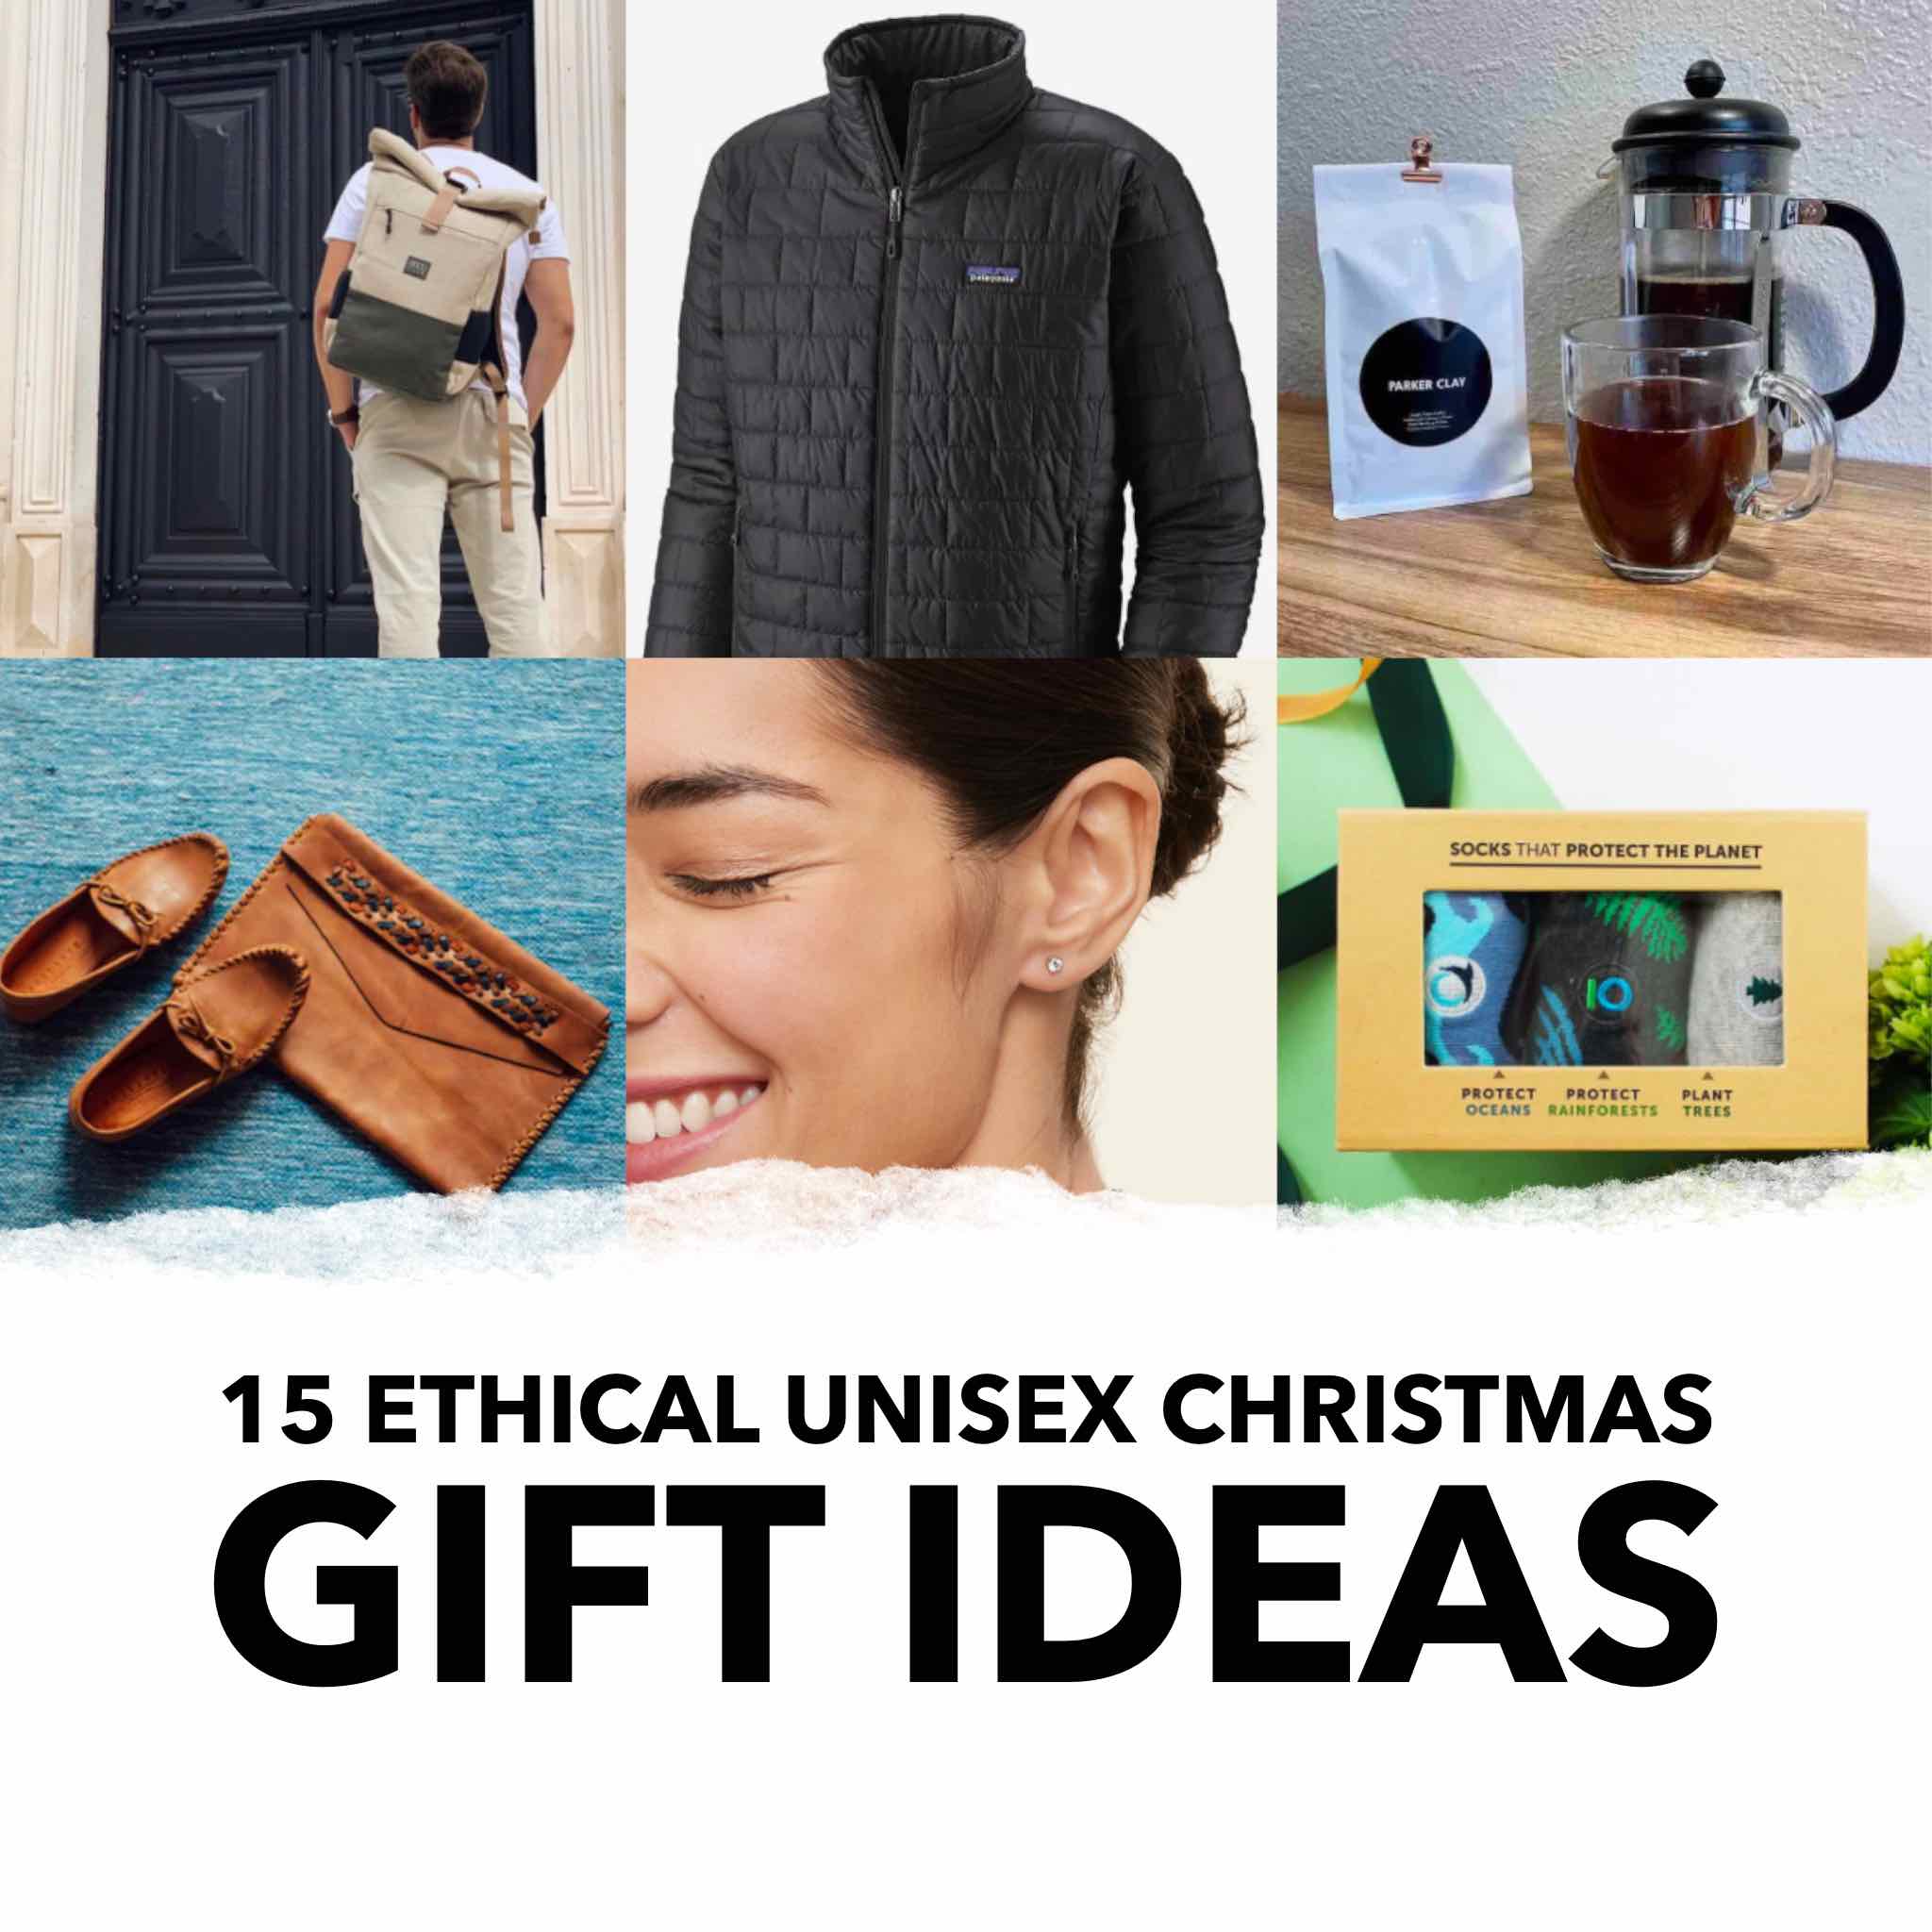 15 ethical sustainable unisex chrismtas gift ideas